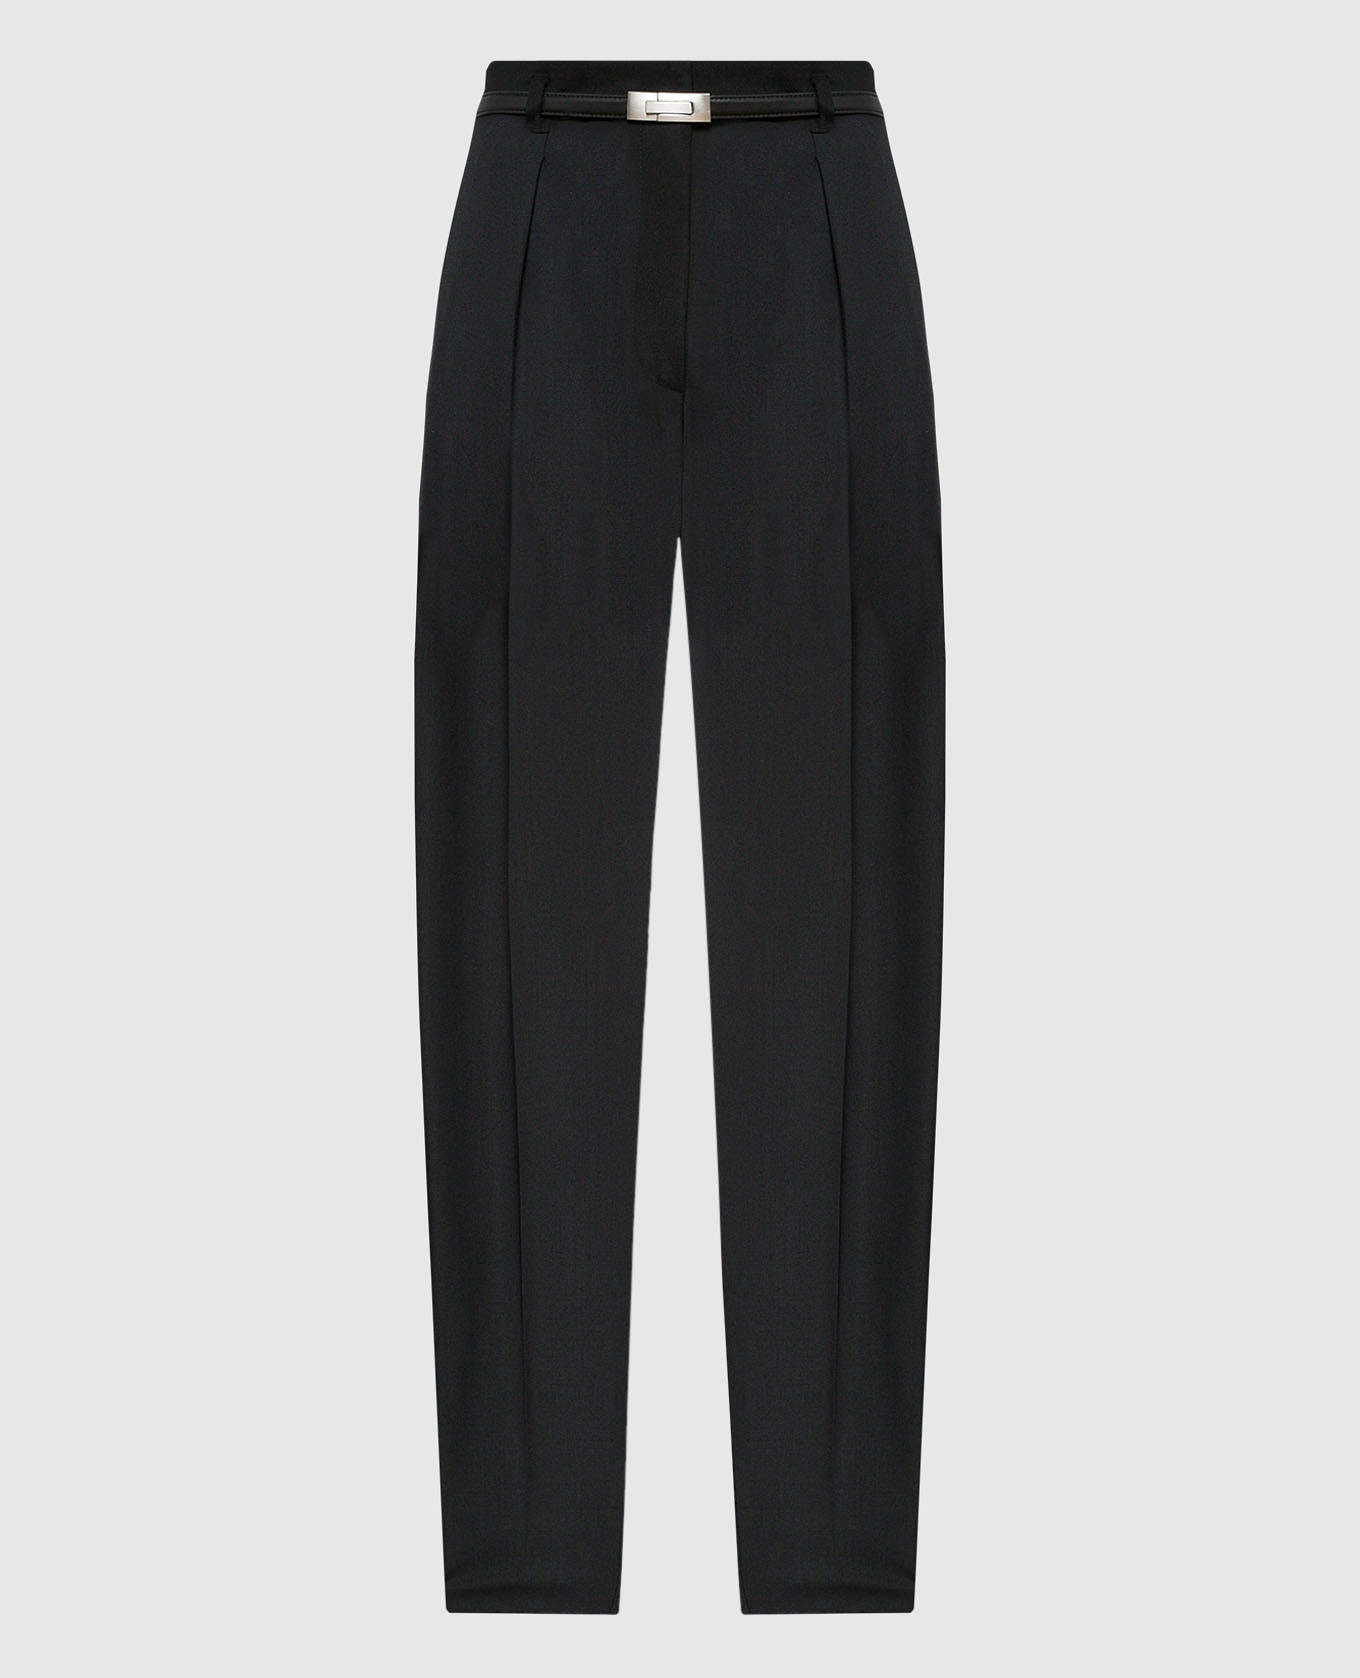 Briose black wool trousers